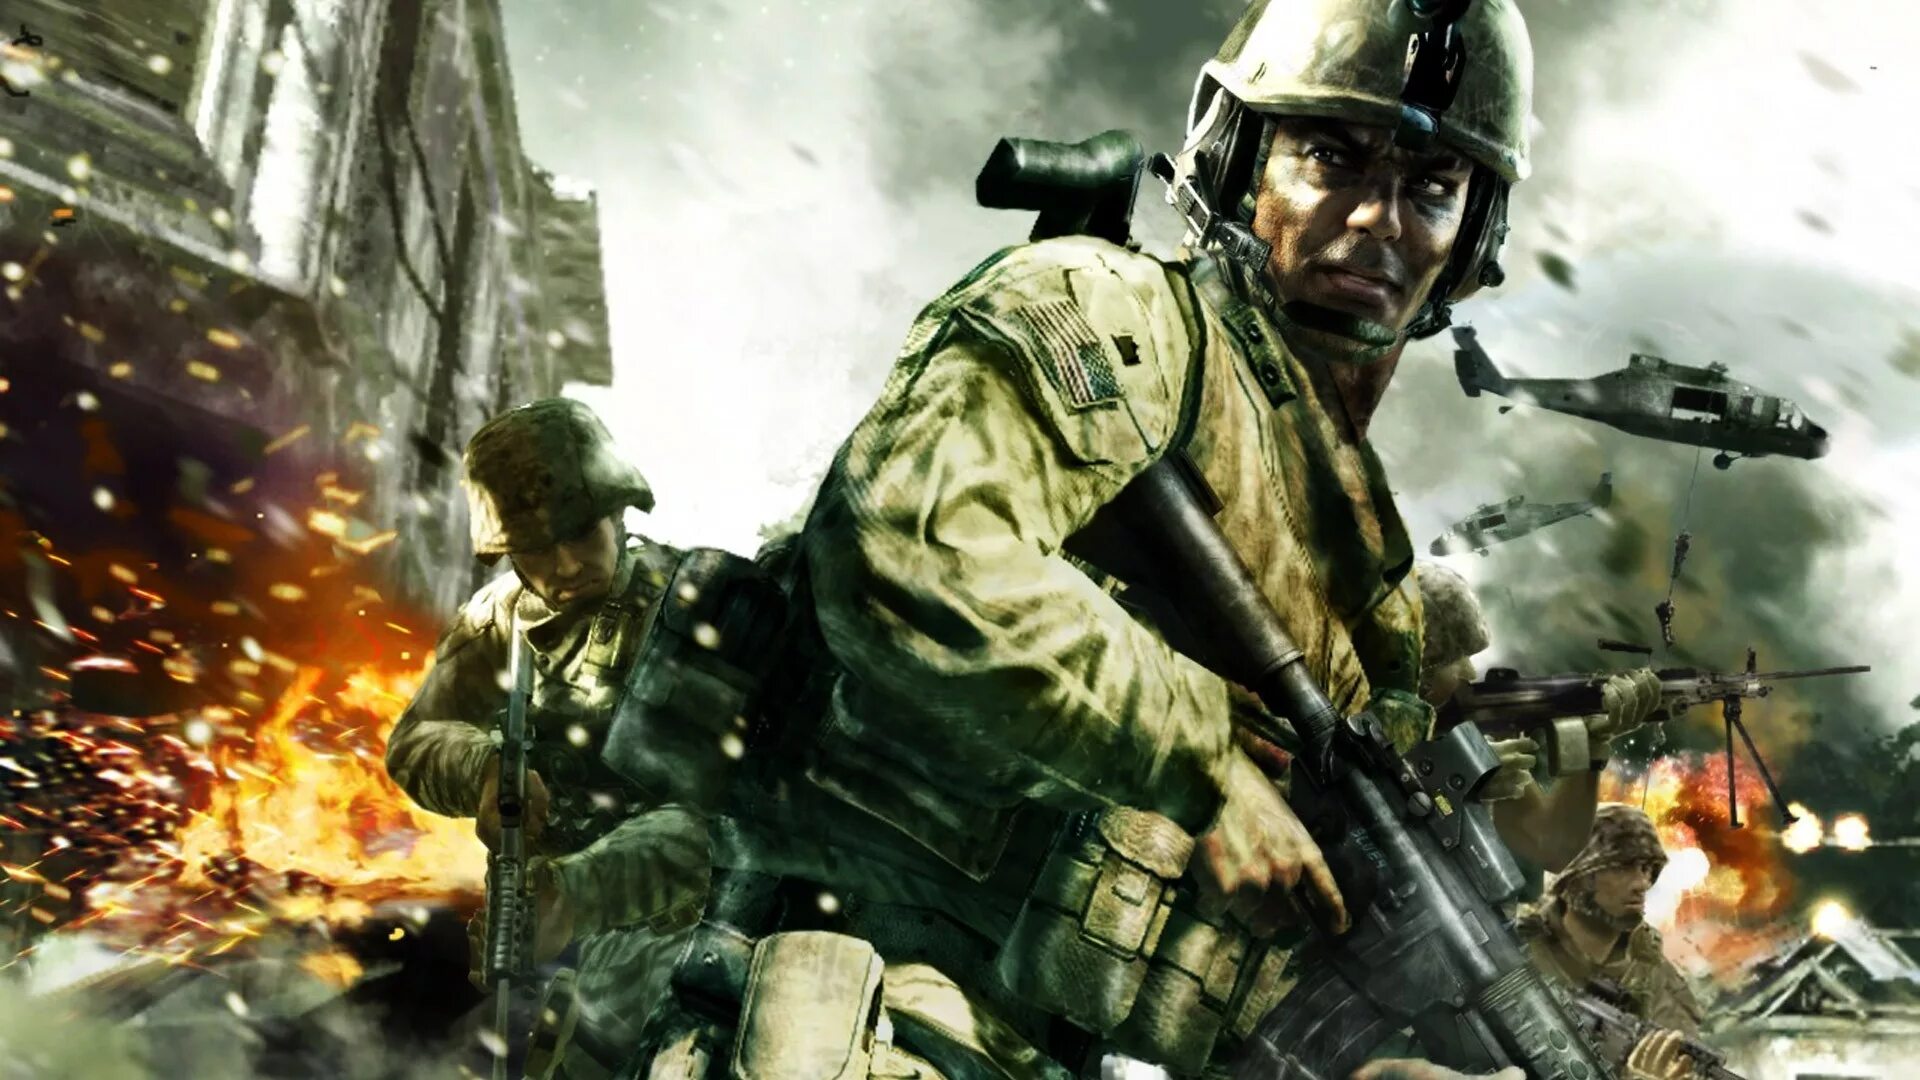 Калавдюти варфаер 4. Call of Duty 4 Modern Warfare. СФД ща вген ьщвук цфкафку 4. Call of Duty - часть 4 - Modern Warfare. Кал оф дьюти Modern Warfare.